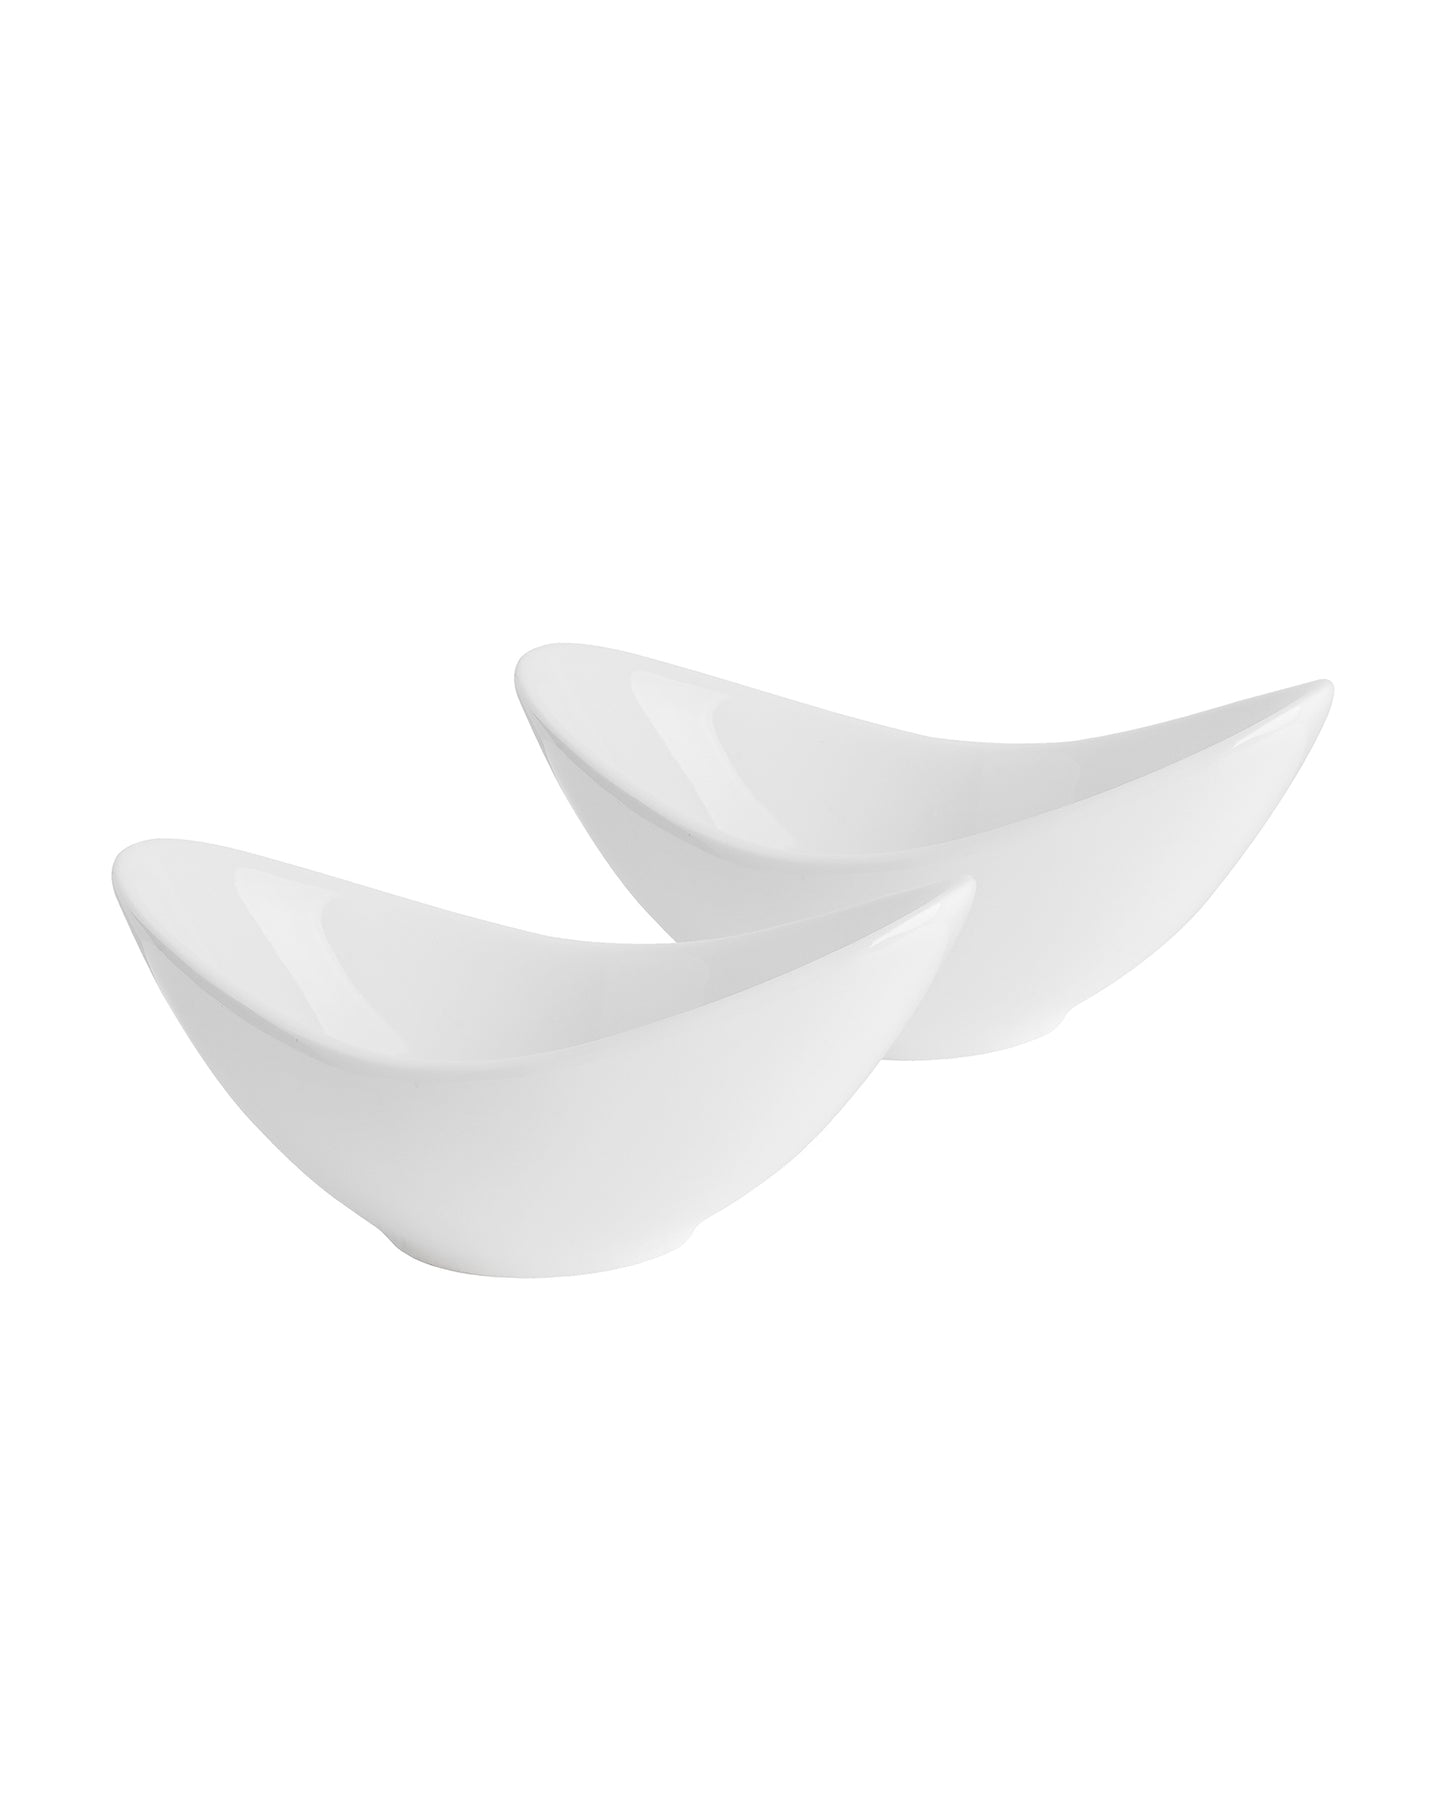 Fine Porcelain Wing Bowl, white, set of 2